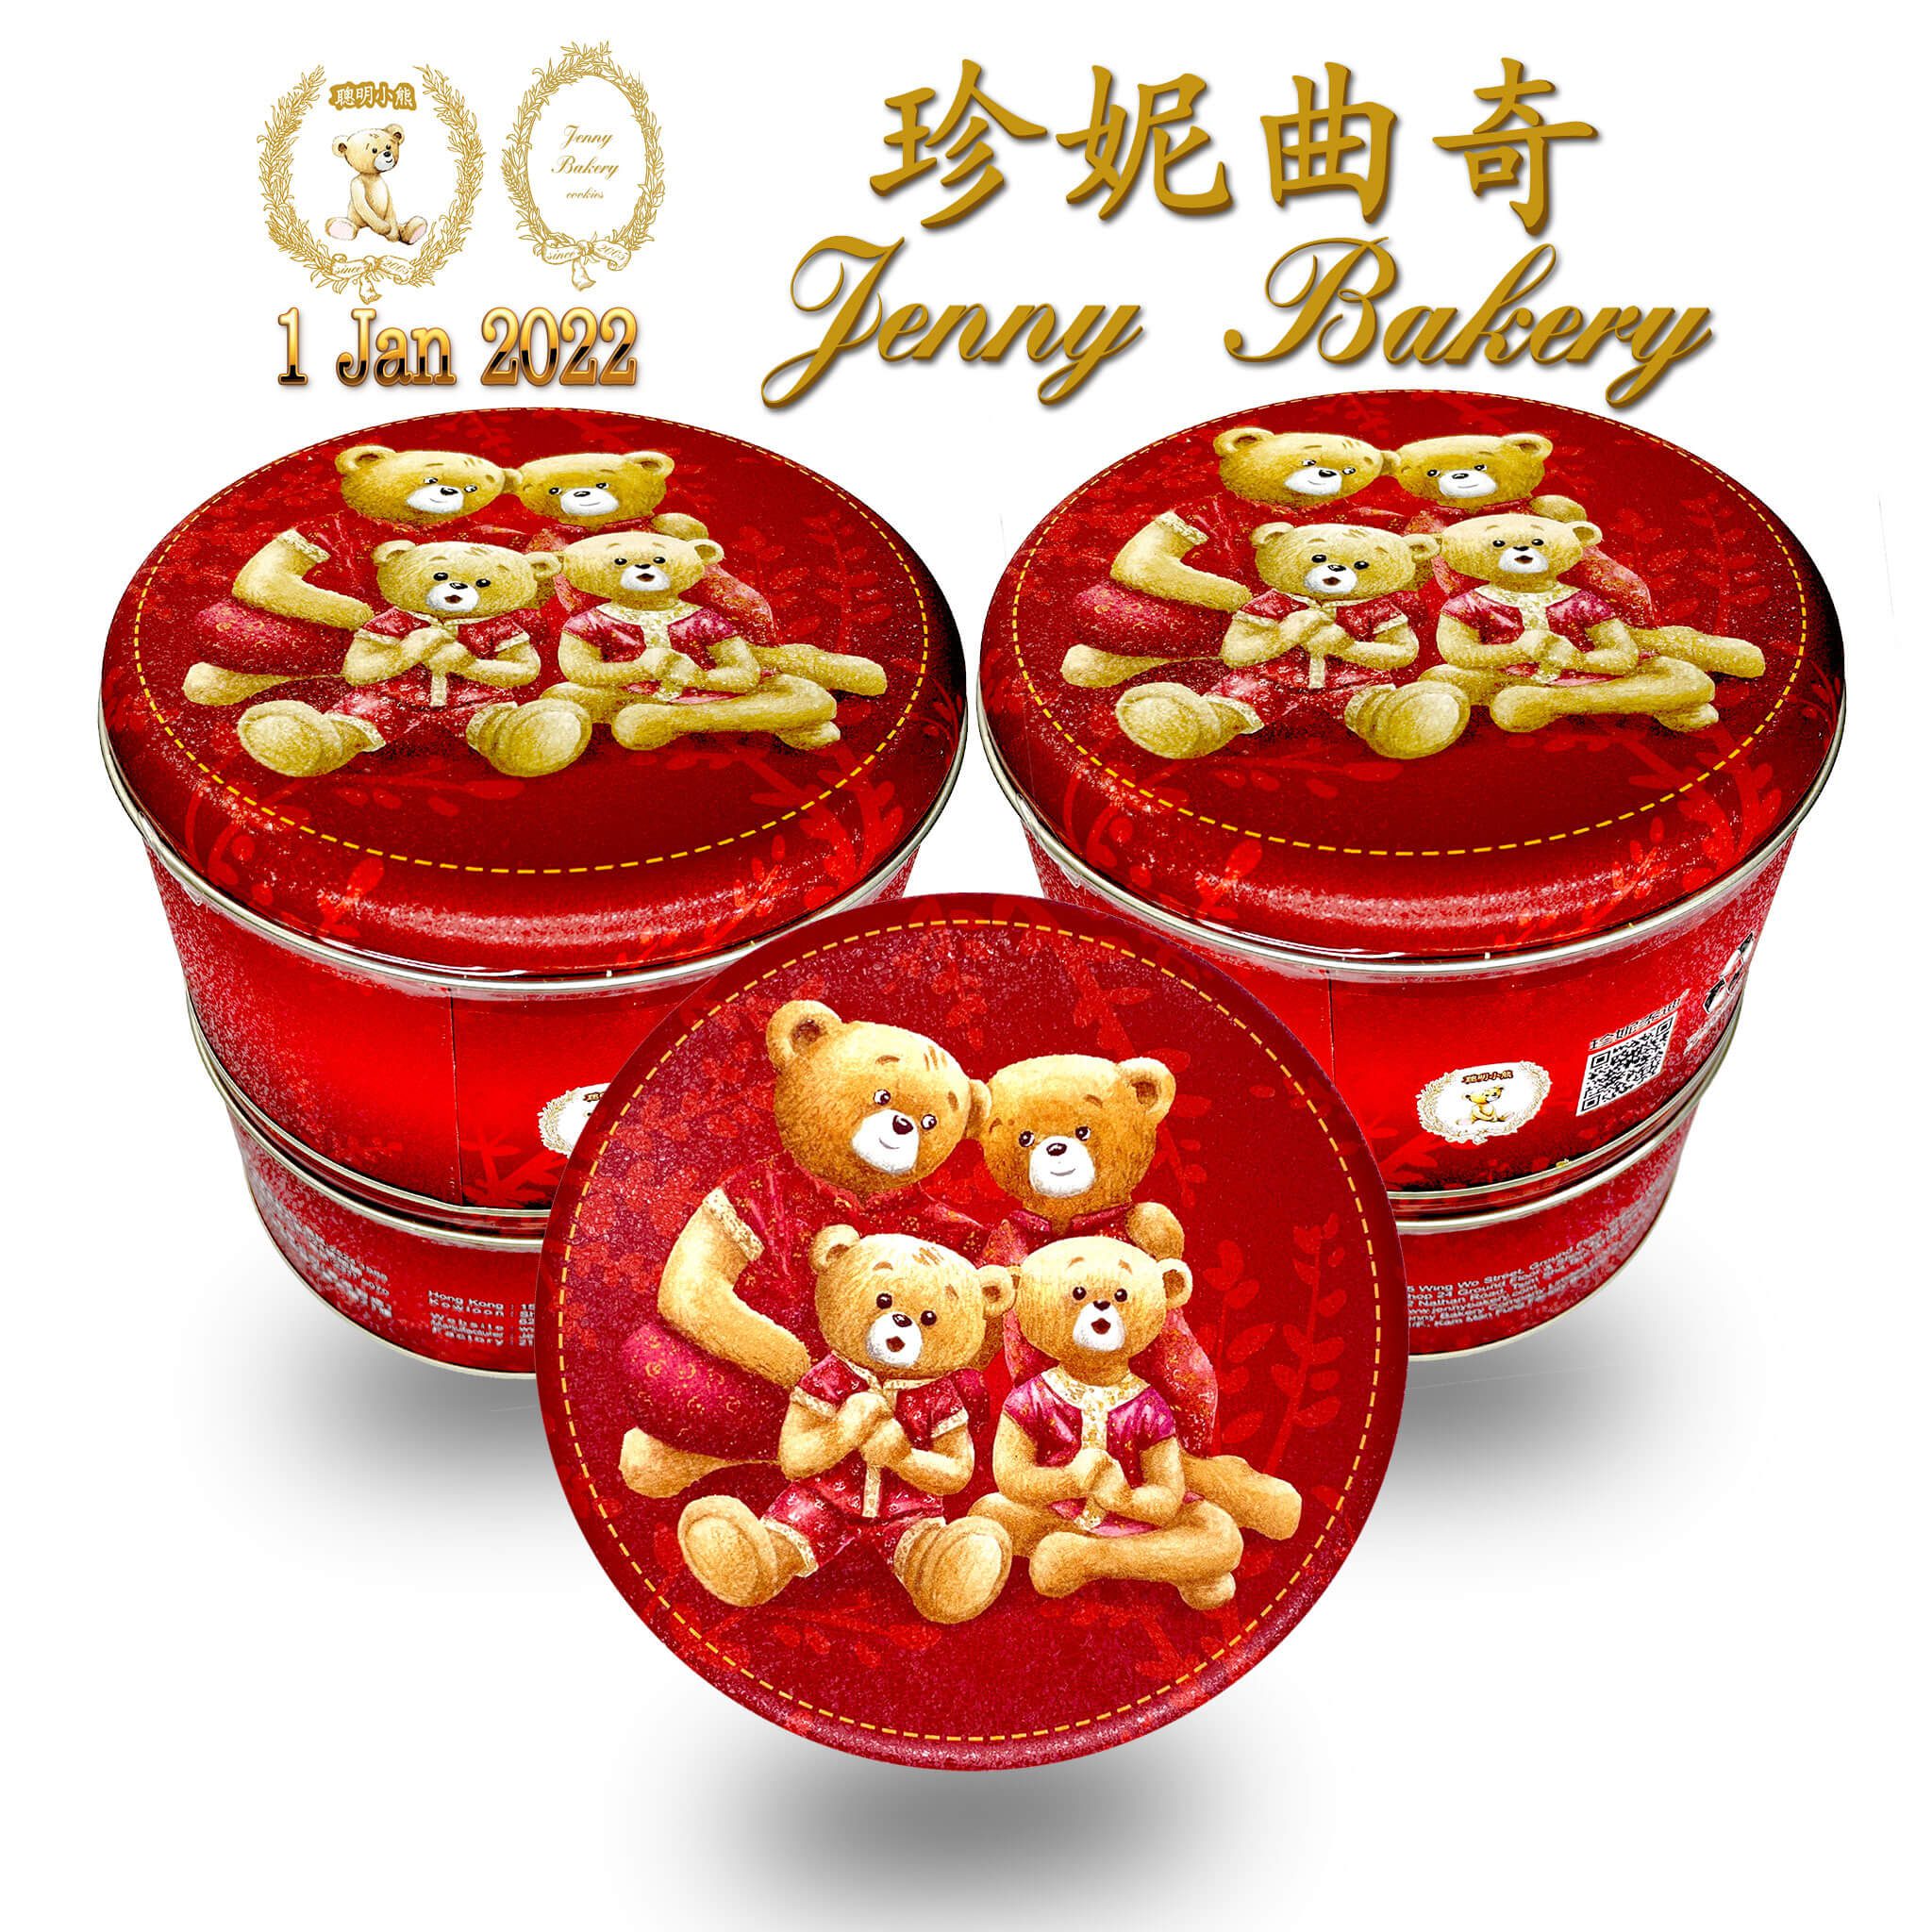 Jenny Bakery Hong Kong | Design20211212 CNY